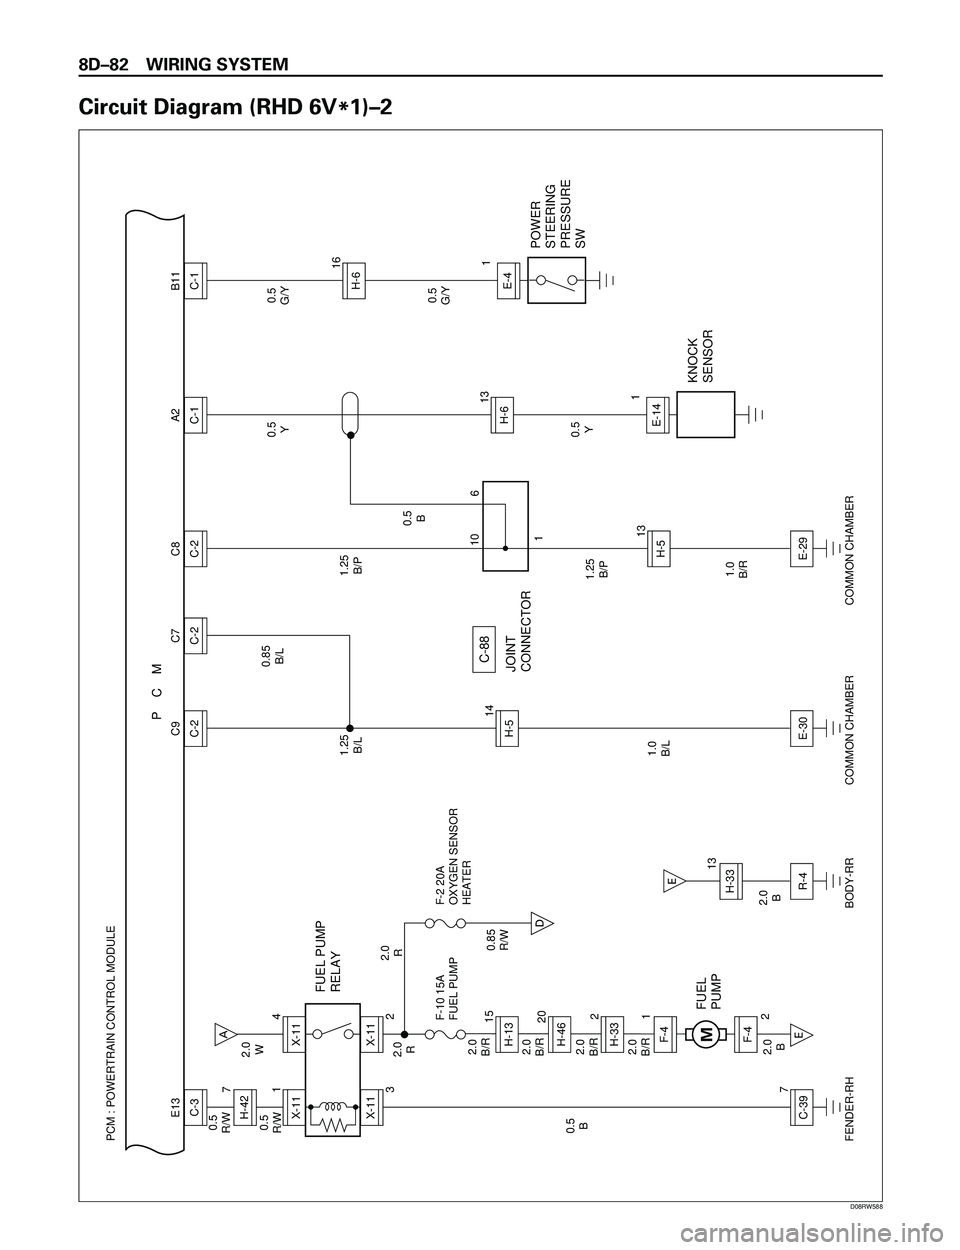 ISUZU TROOPER 1998  Service Repair Manual 8DÐ82 WIRING SYSTEM
Circuit Diagram (RHD 6V
*1)Ð2
PCM : POWERTRAIN CONTROL MODULE 
P    C    M
AE
E 0.5
B
1.0
B/L 0.5
R/W
0.5
R/W
X-111C-397 7
3X-11C-3 E13
FUEL PUMP
RELAY
FUEL 
PUMP
F-10 15A
FUEL P